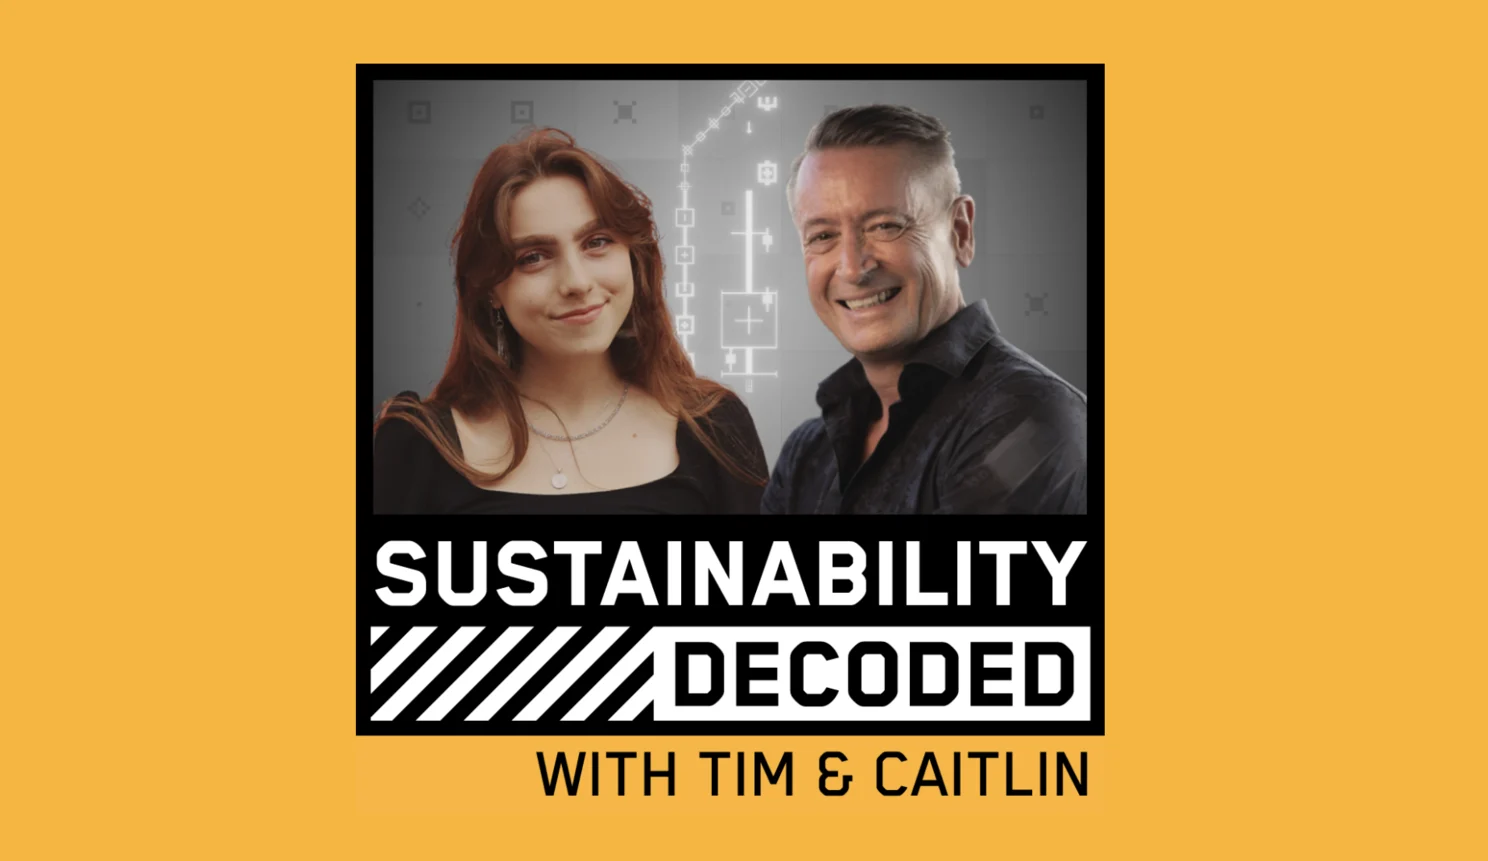 Sustainability Decoded has landed!